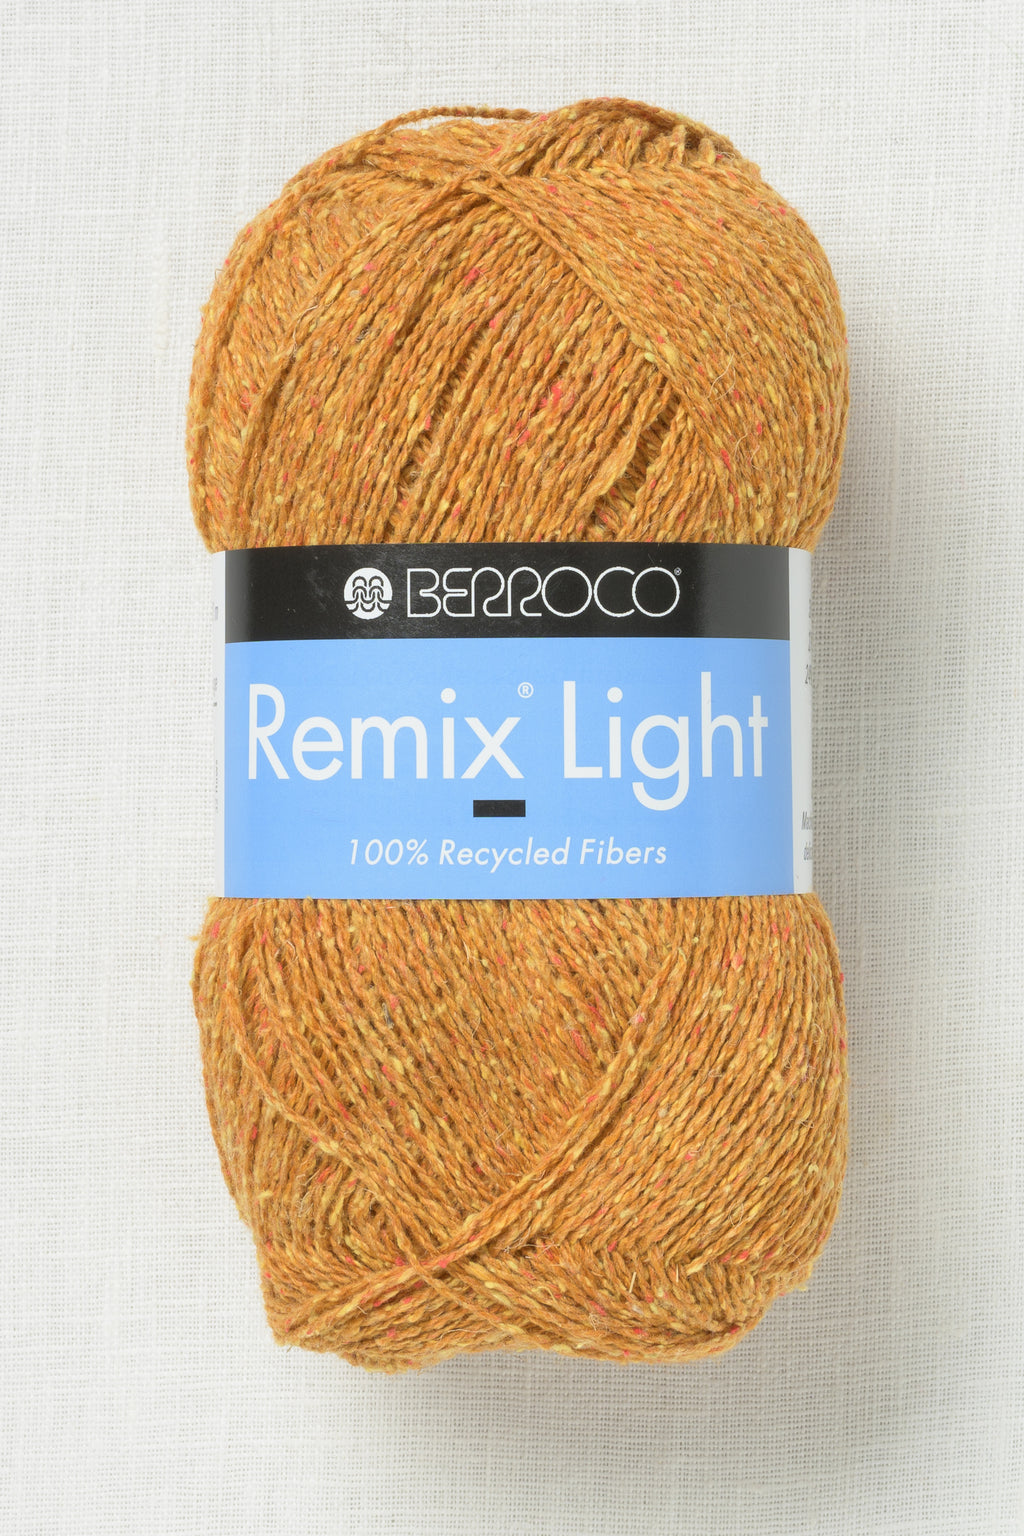 Berroco Remix Light 6950 Dijon